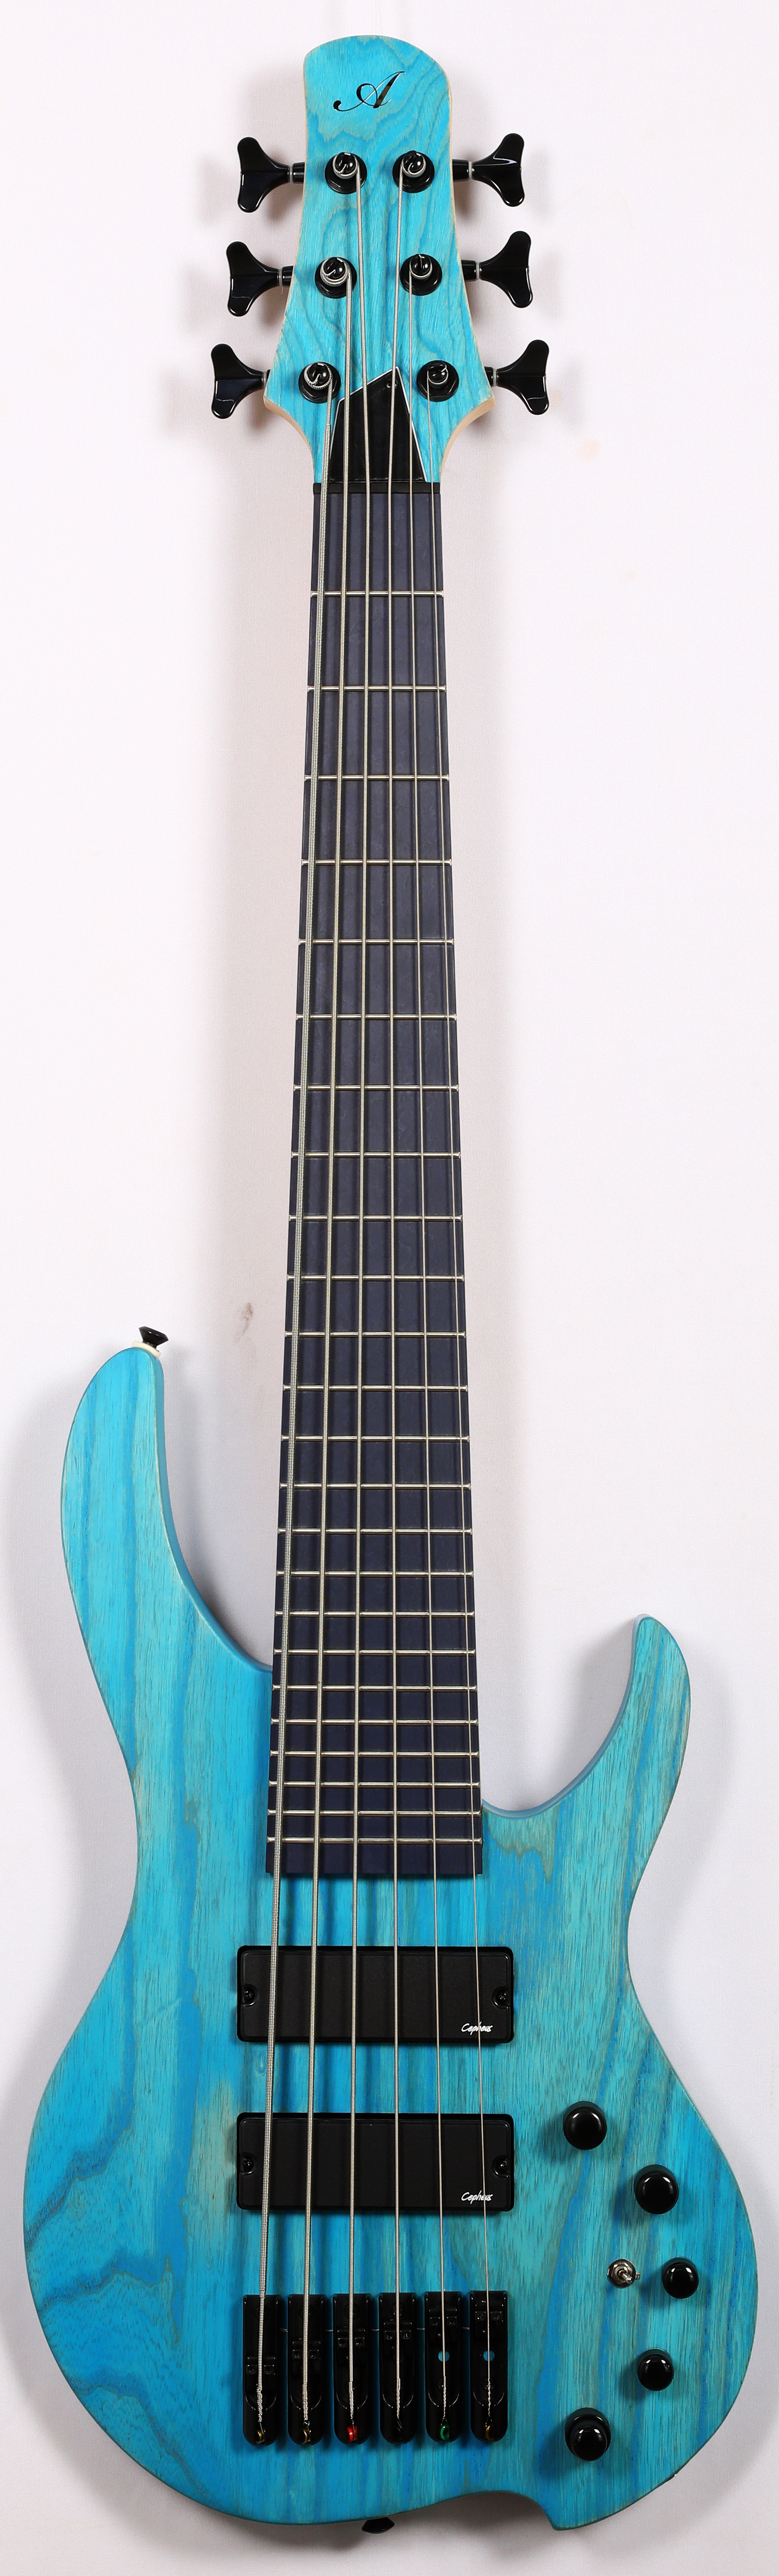 Brice 630 Ash Blue Short Scale Bass